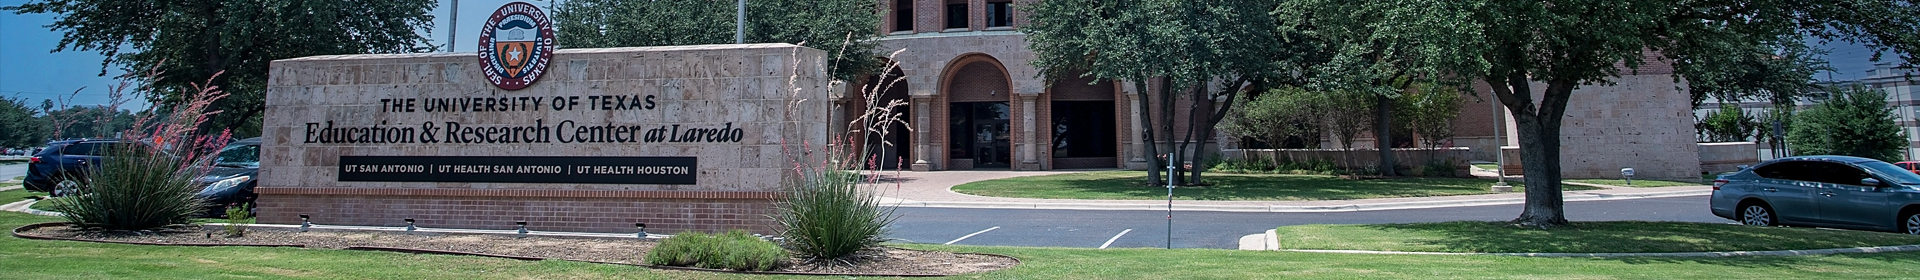 UT Health San Antonio School of Dentistry, Periodontics/Division of Dental Hygiene at Laredo, Texas